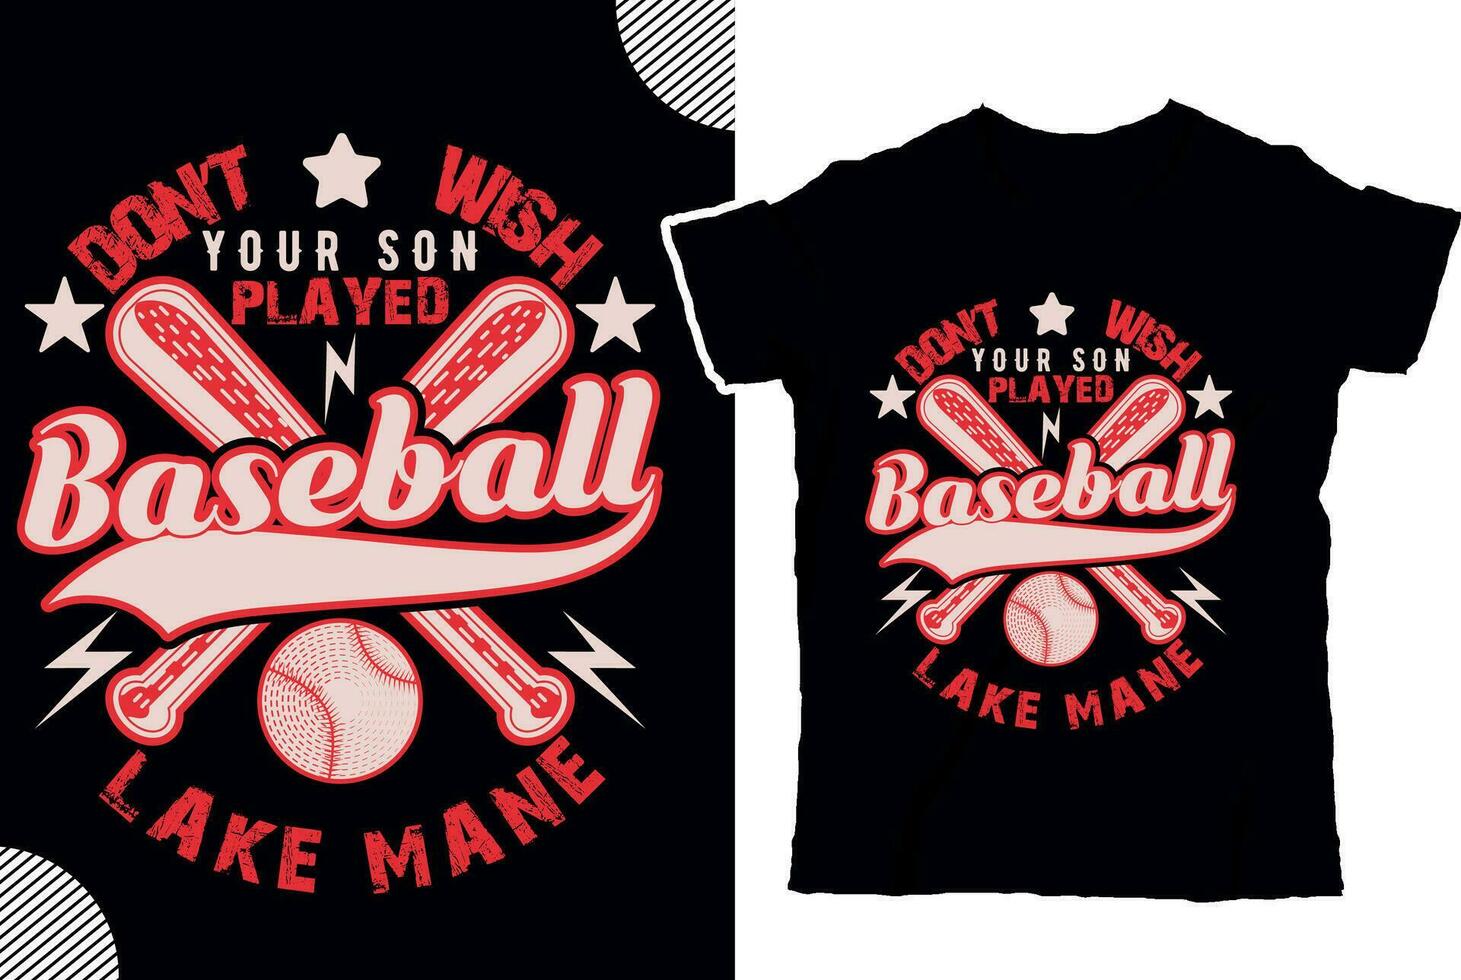 Don't wish your son played baseball lake mane vector t shirt design